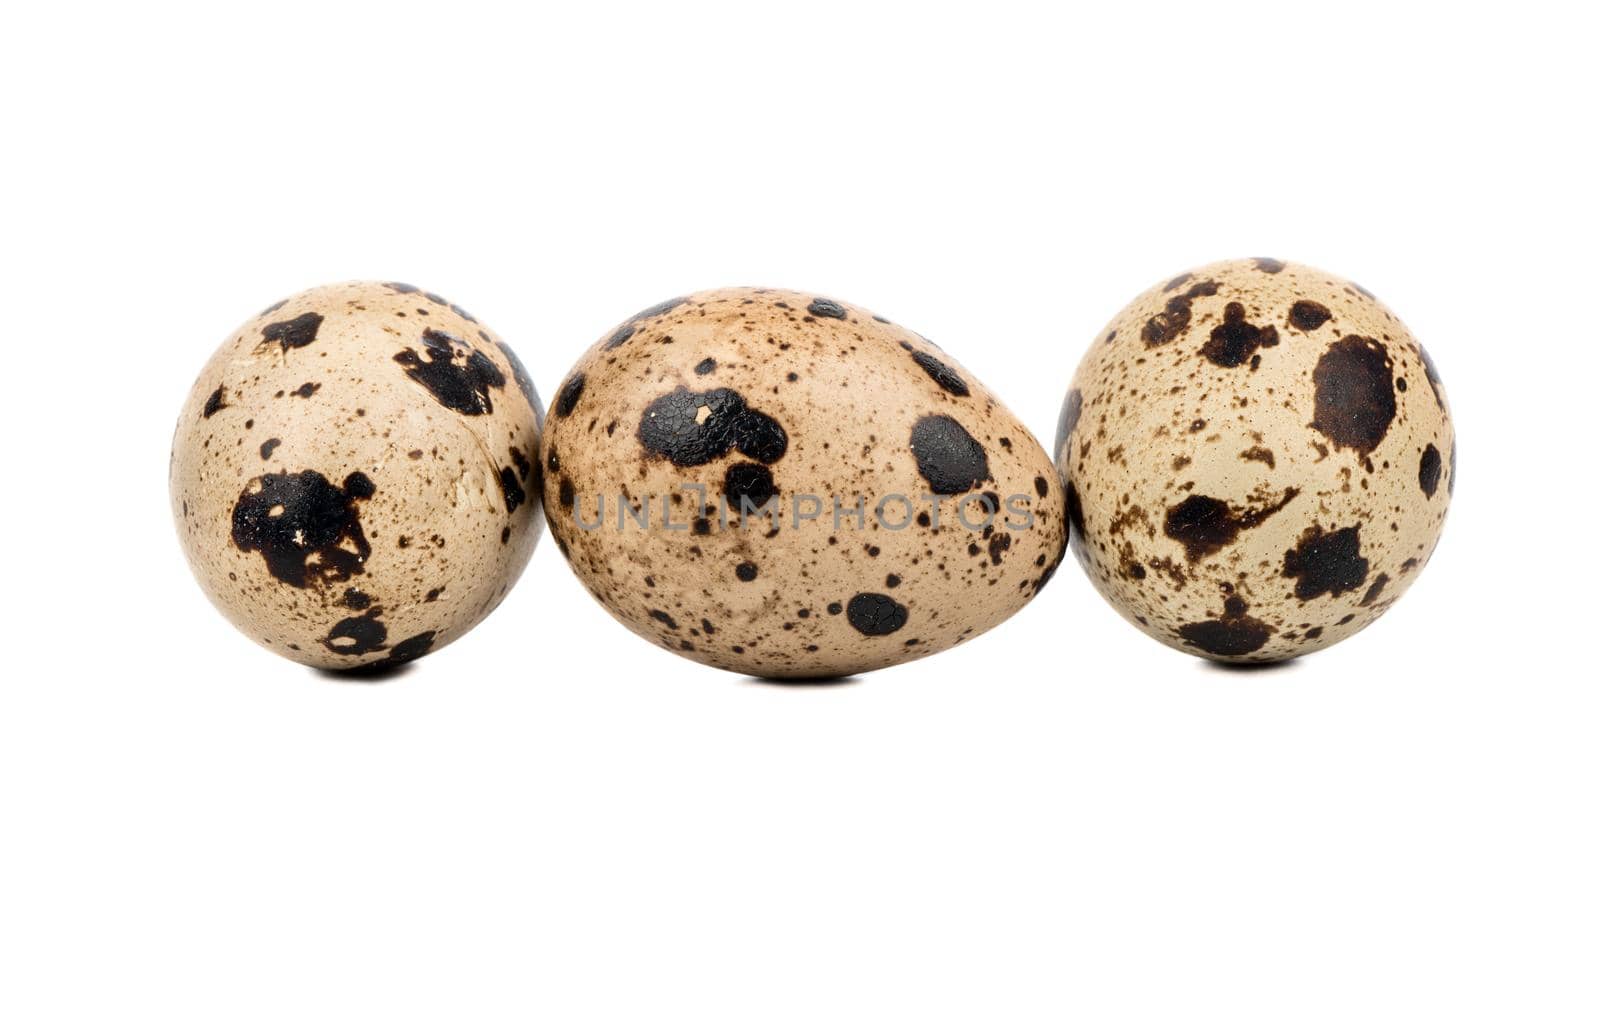 Three raw quail eggs in a row on a white background